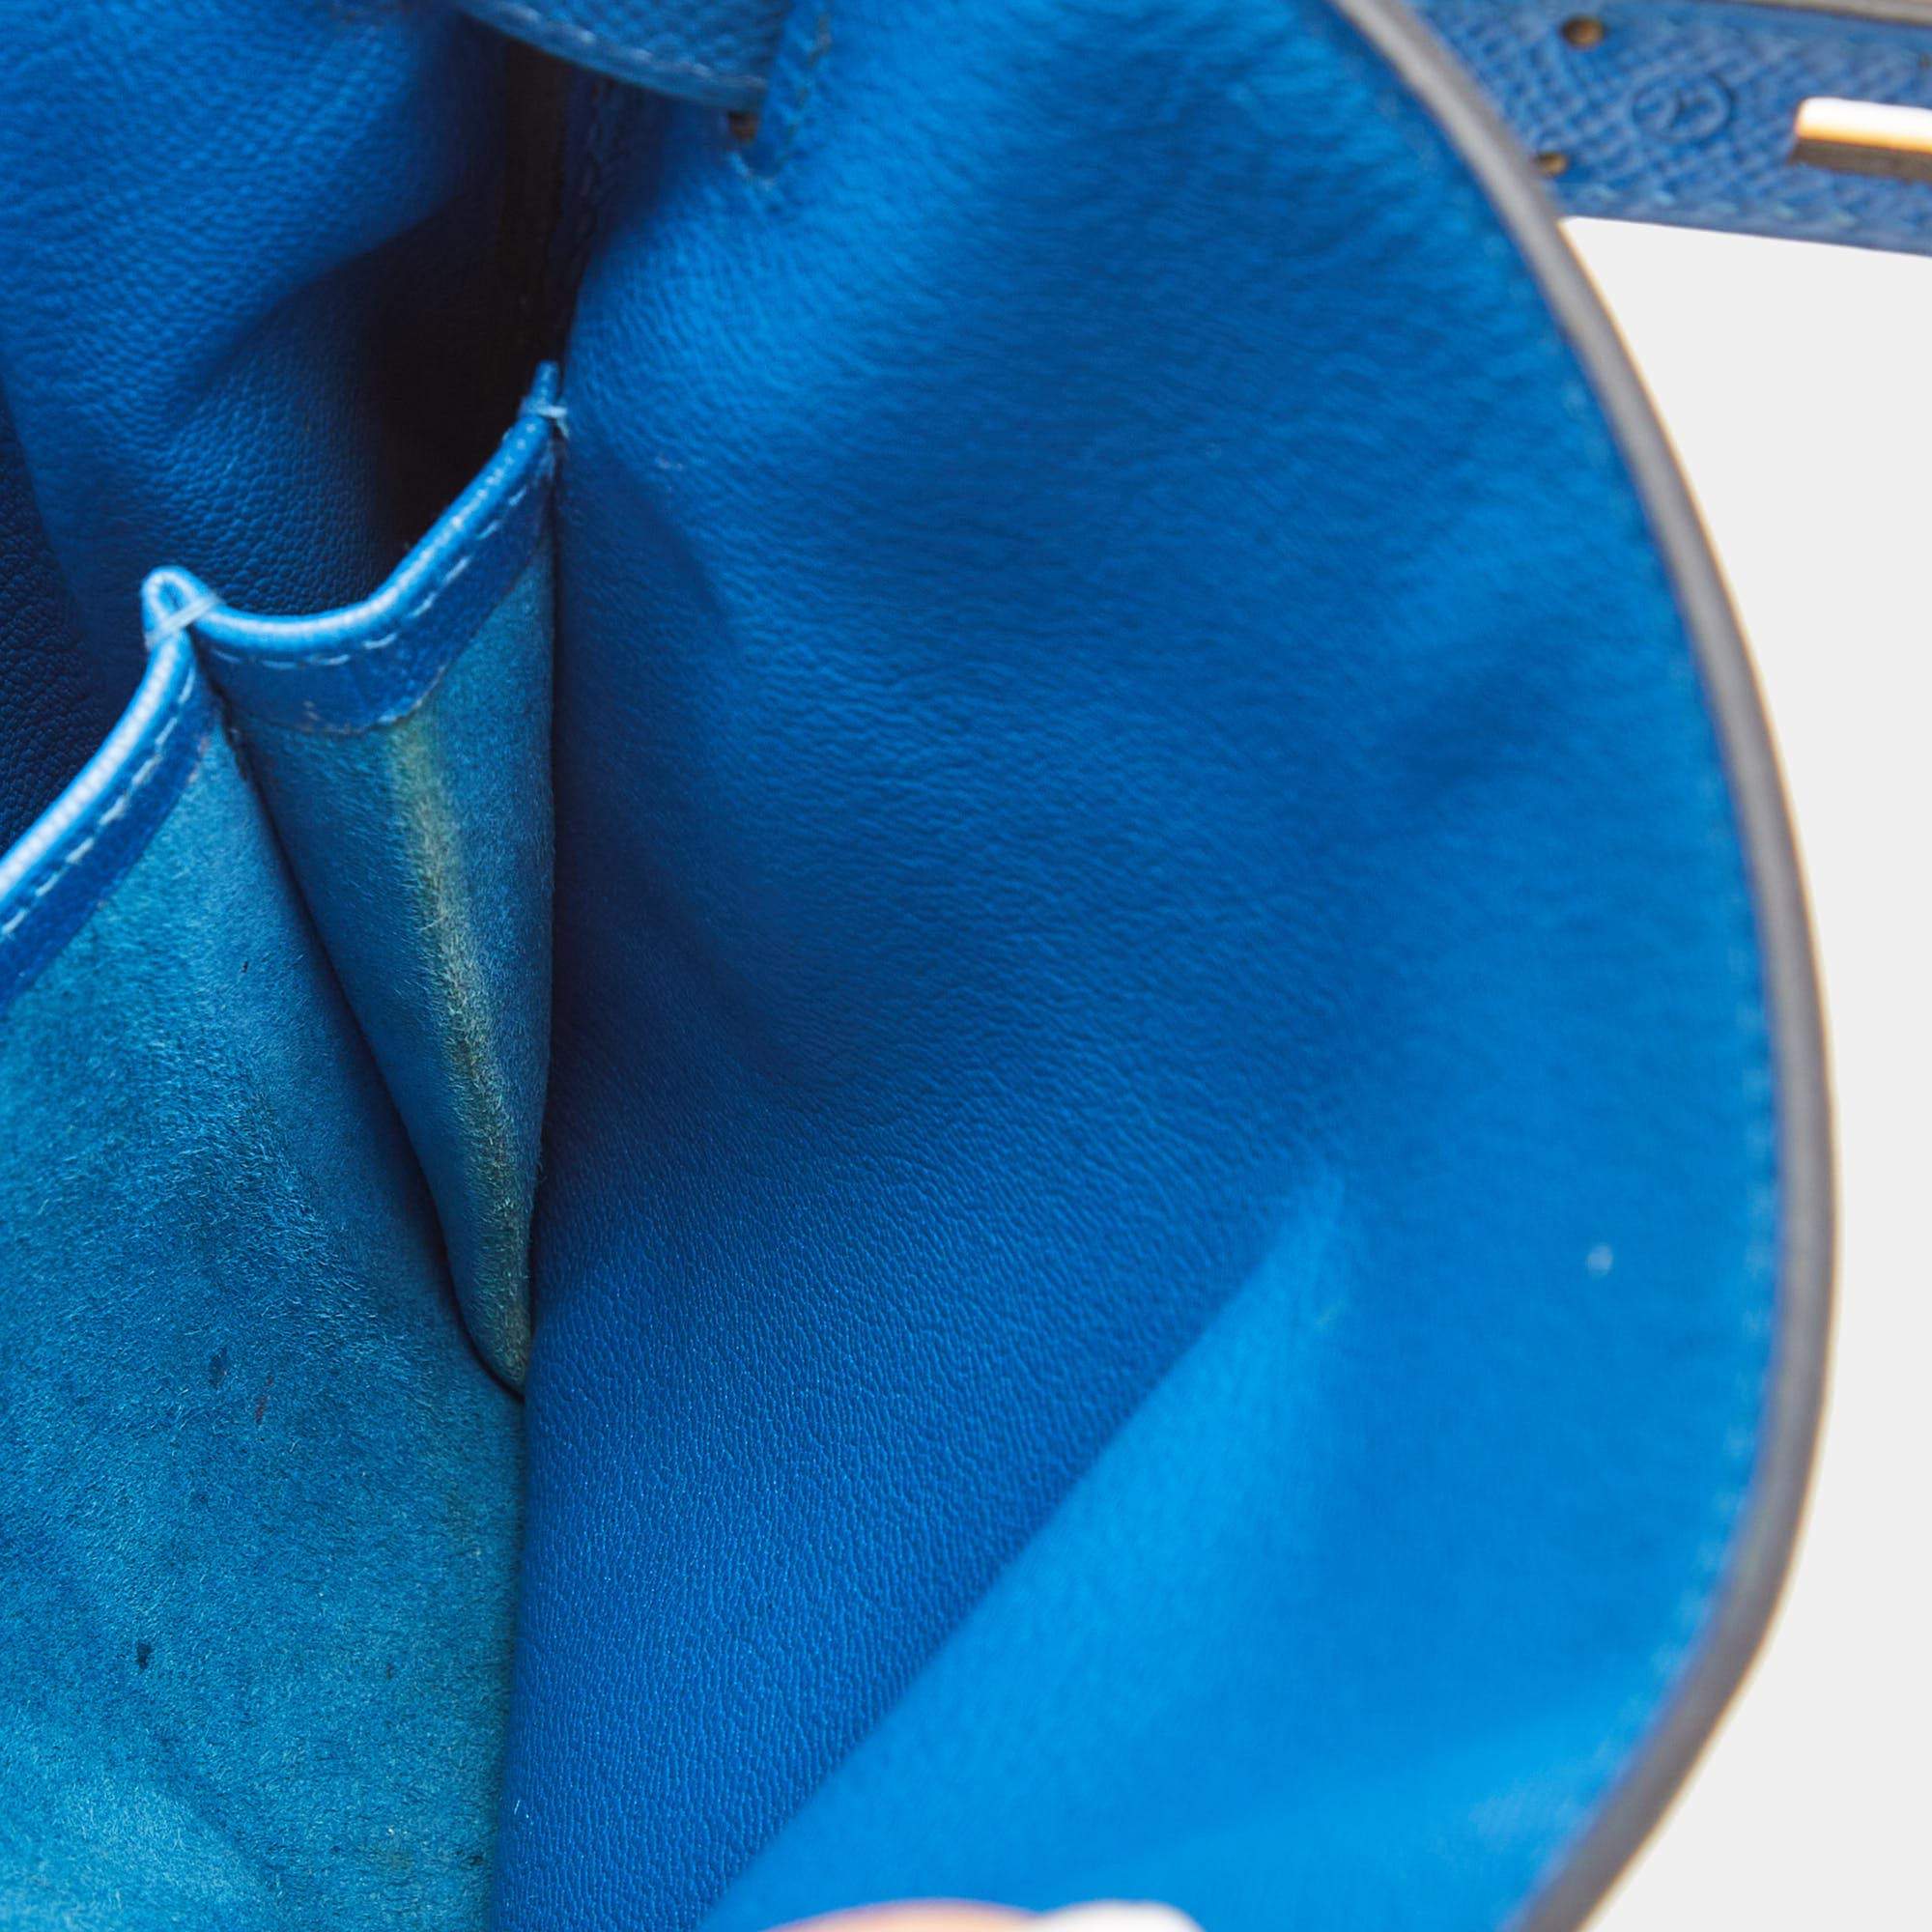 Hermès Cobalt Courchevel Leather Gold Finish Kelly Retourne 35 Bag Hermes